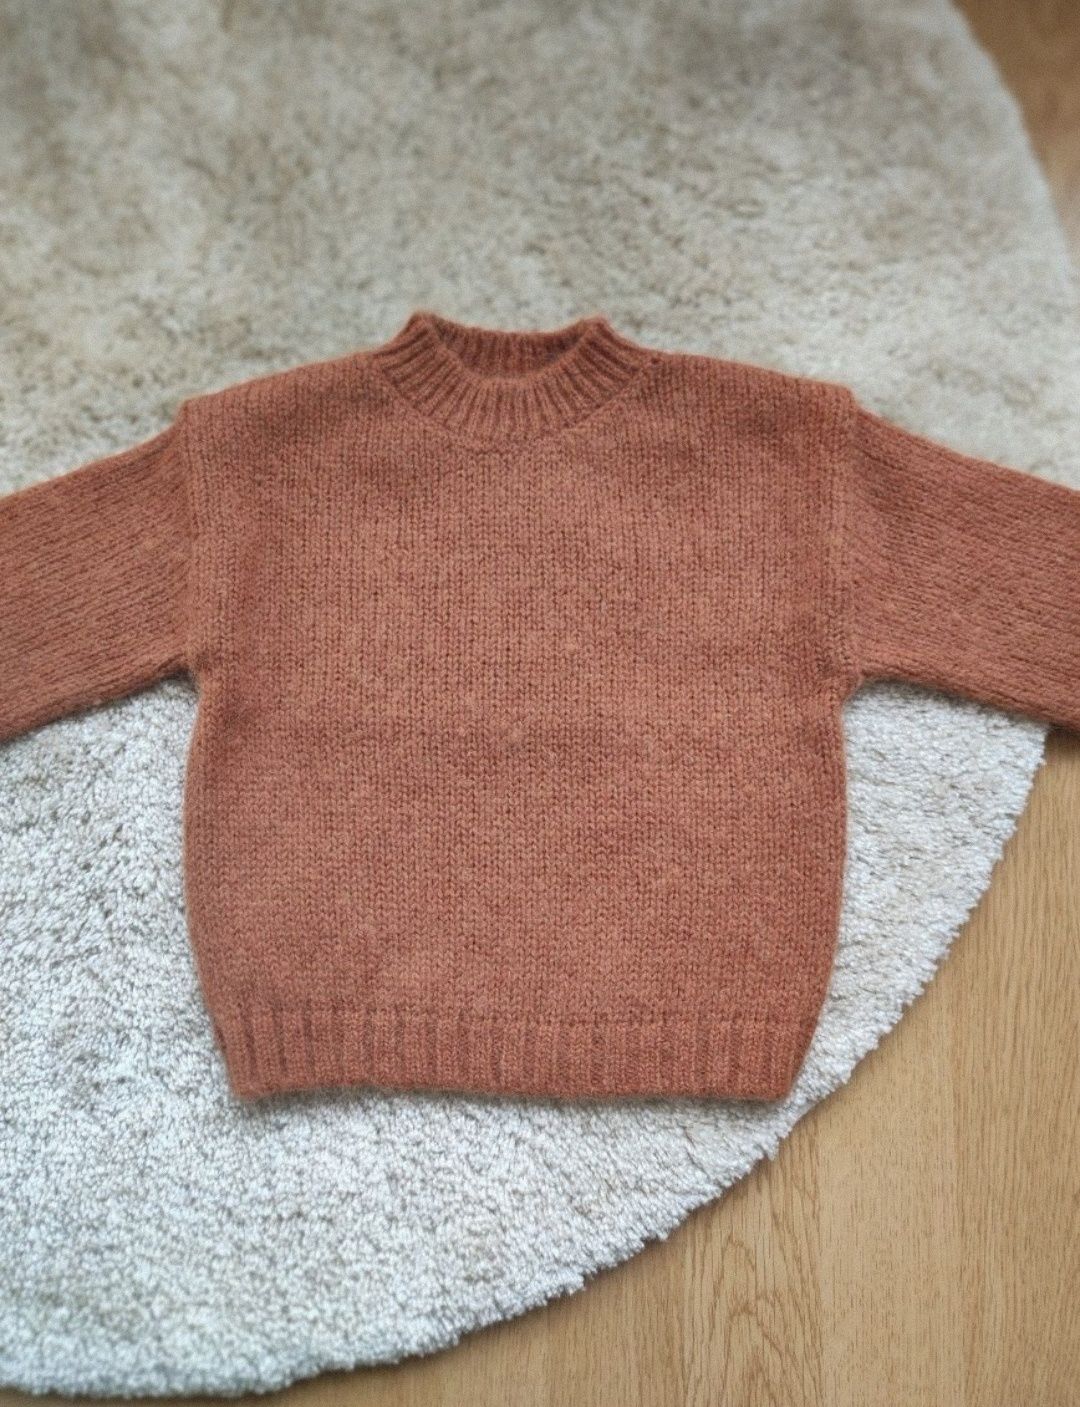 Zara топъл пуловер за момичета, размер до 98 см.